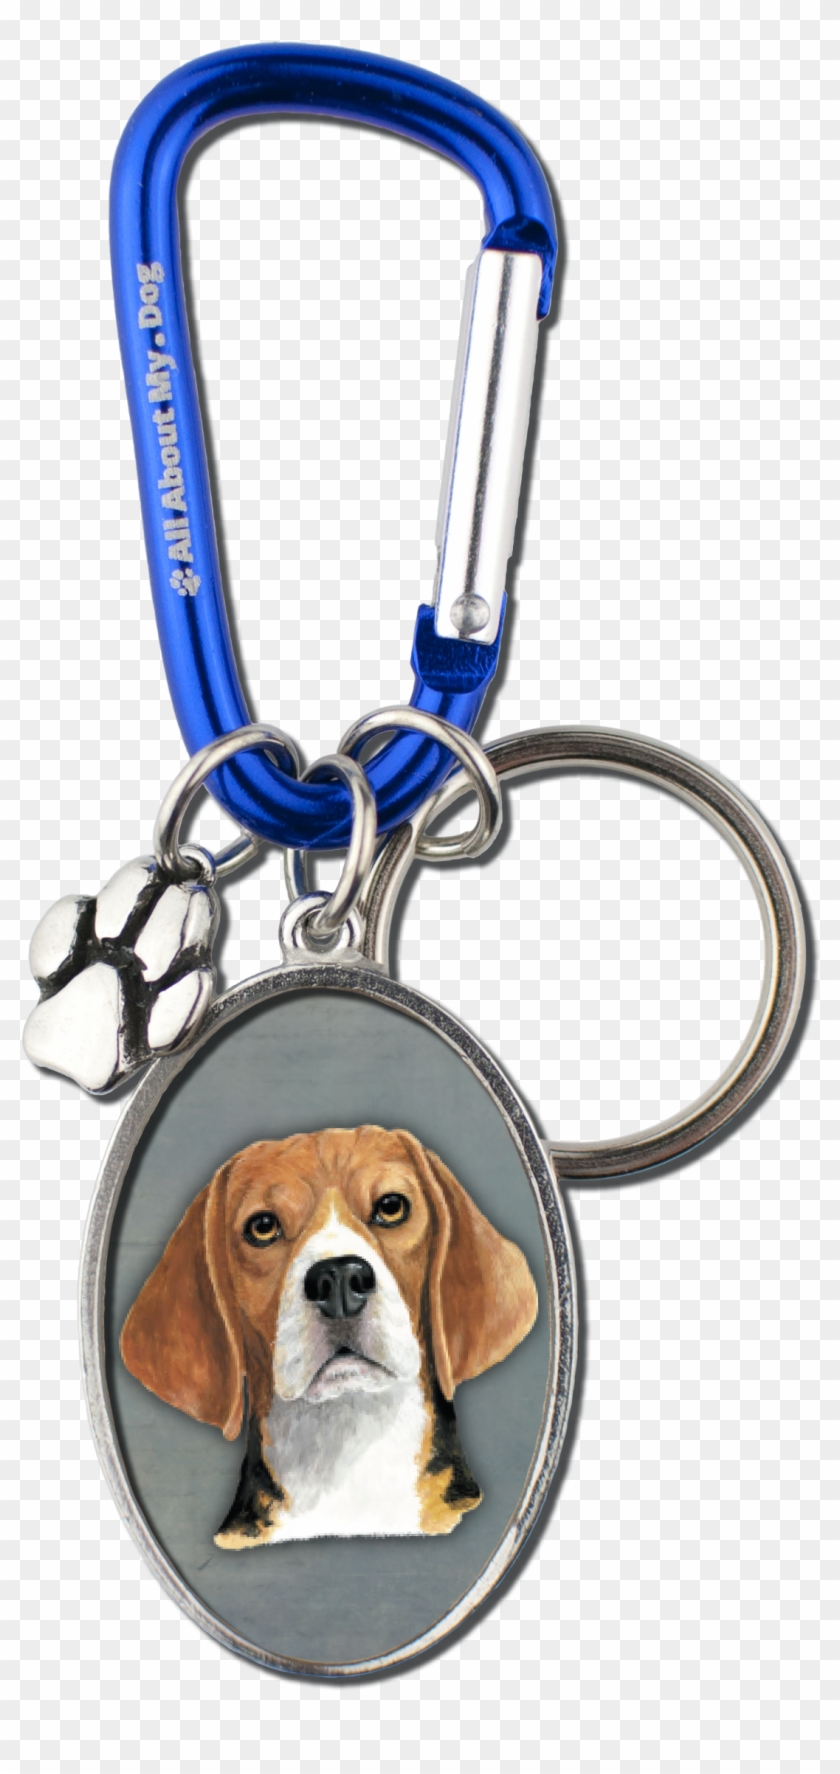 Beagle Cameo Carabiner Keychain - Keychain Clipart #5366695